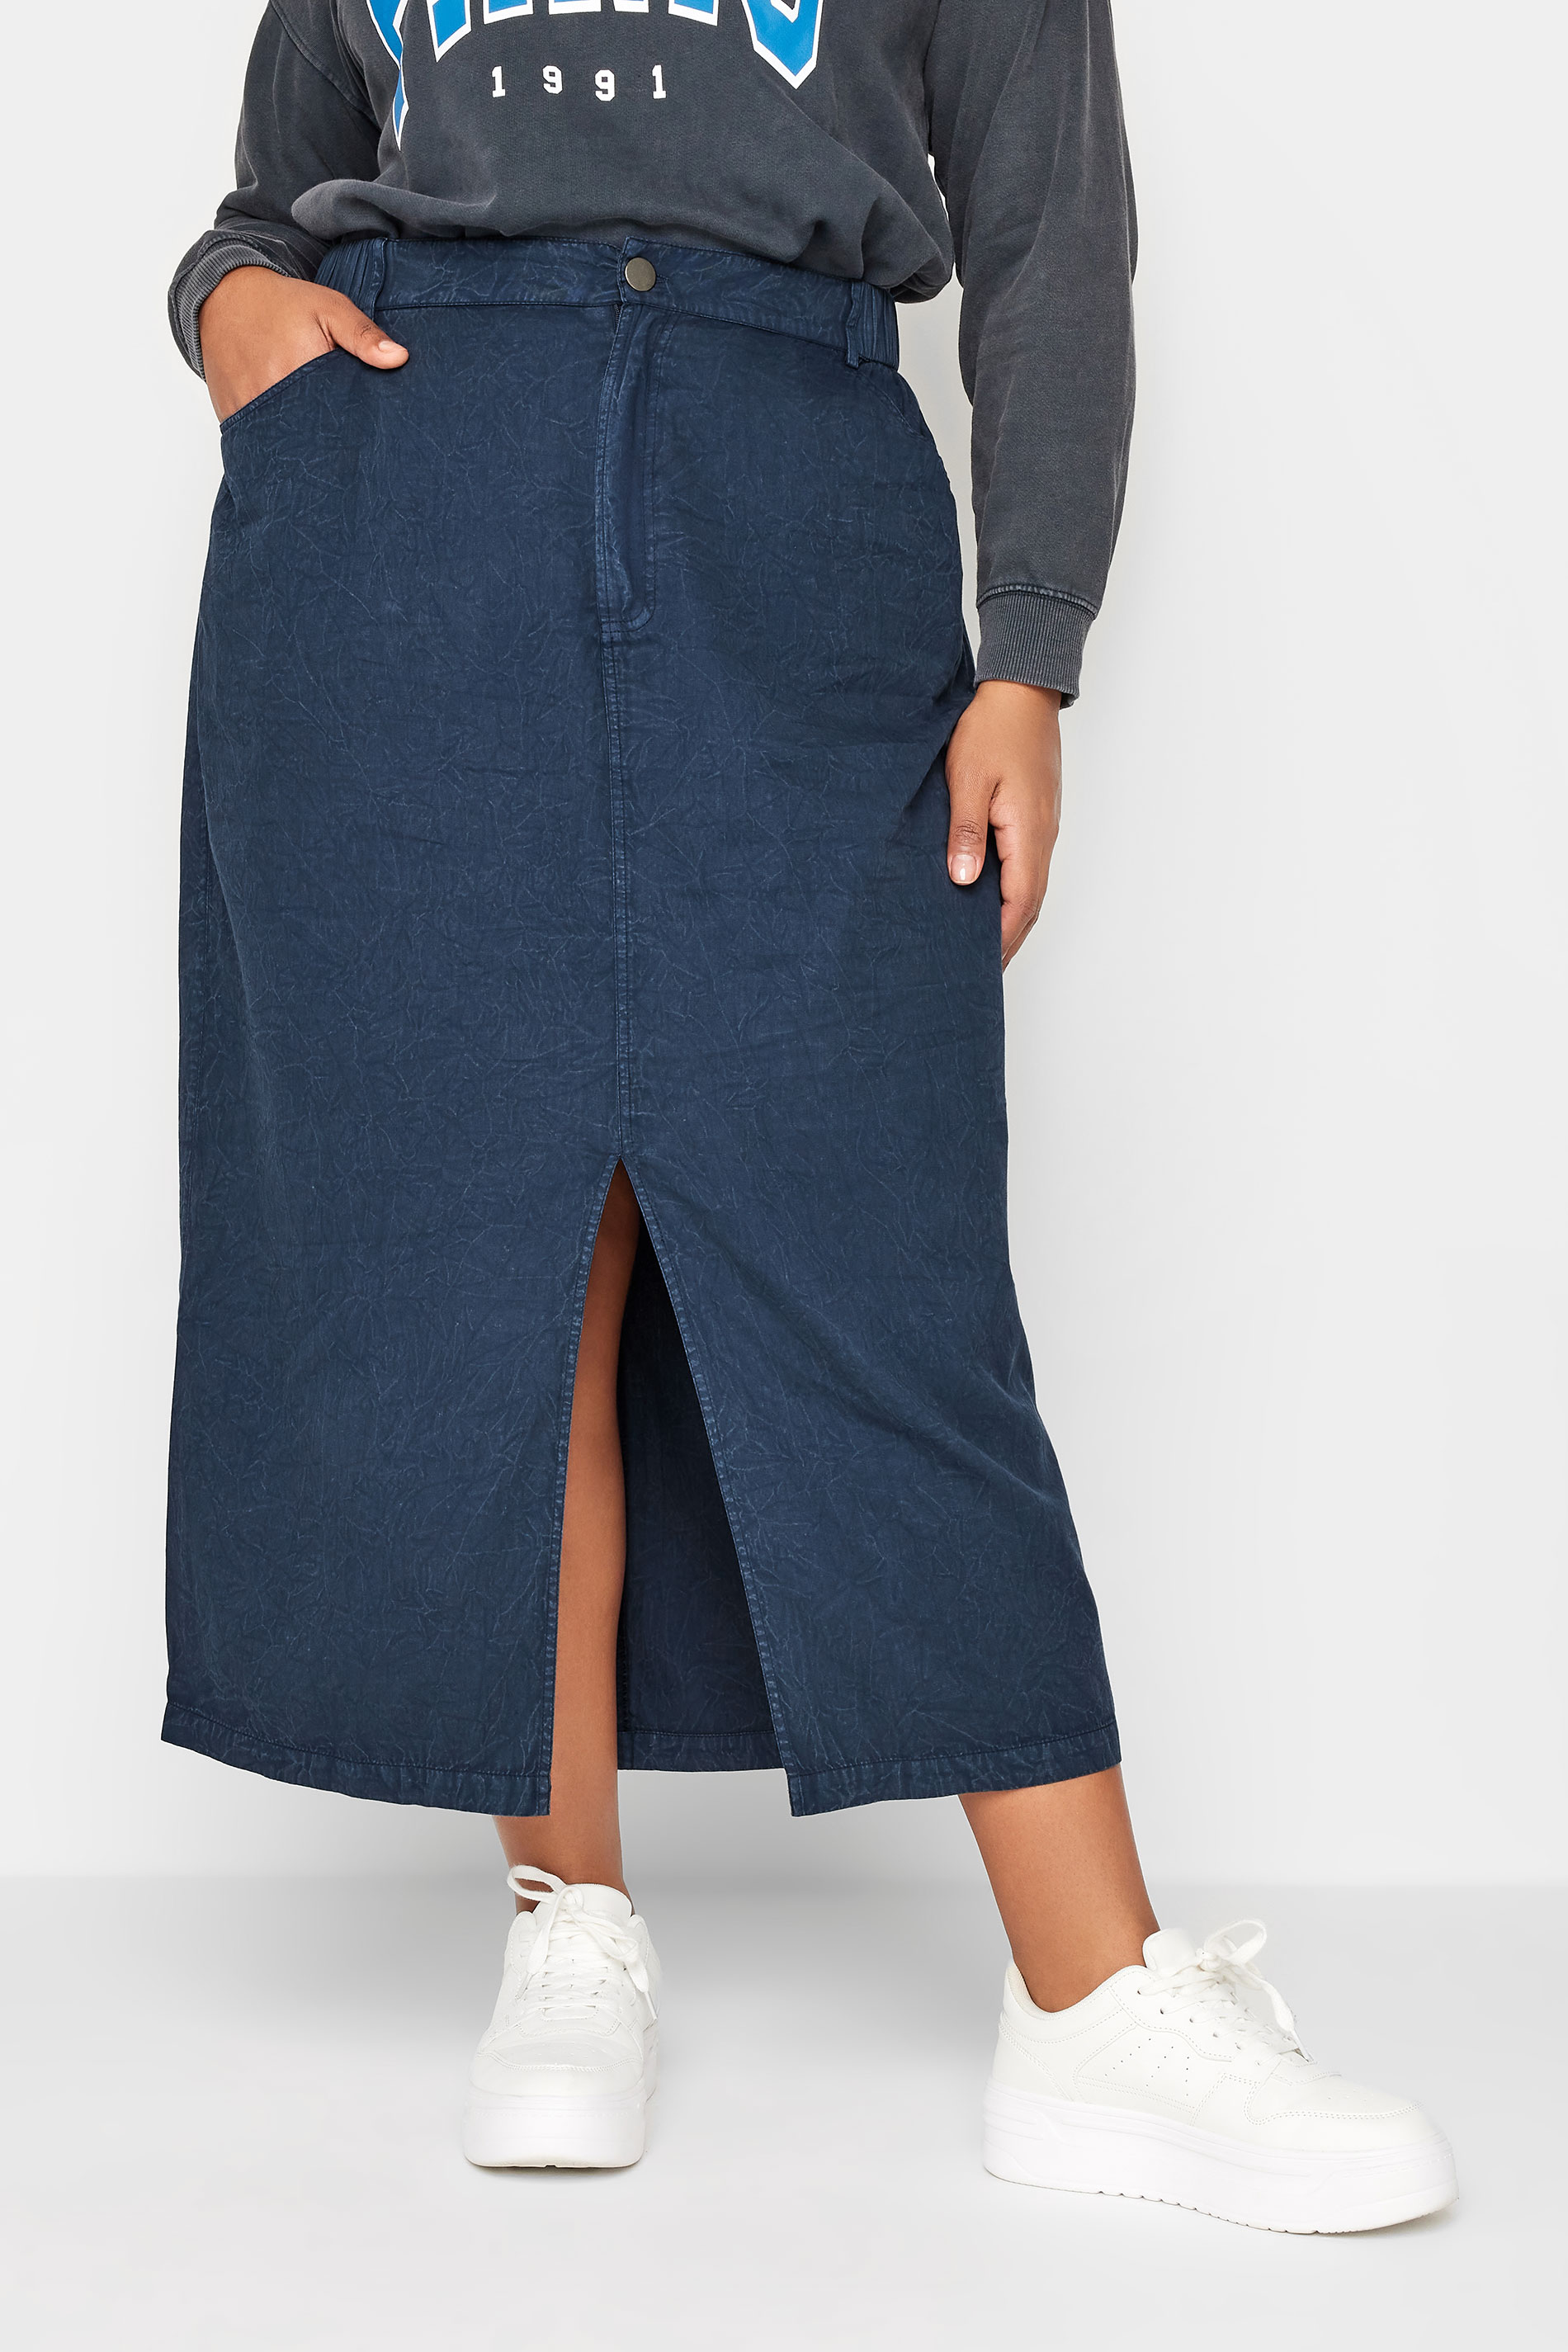 YOURS Curve Dark Blue Acid Wash Midaxi Denim Skirt | Yours Clothing  1